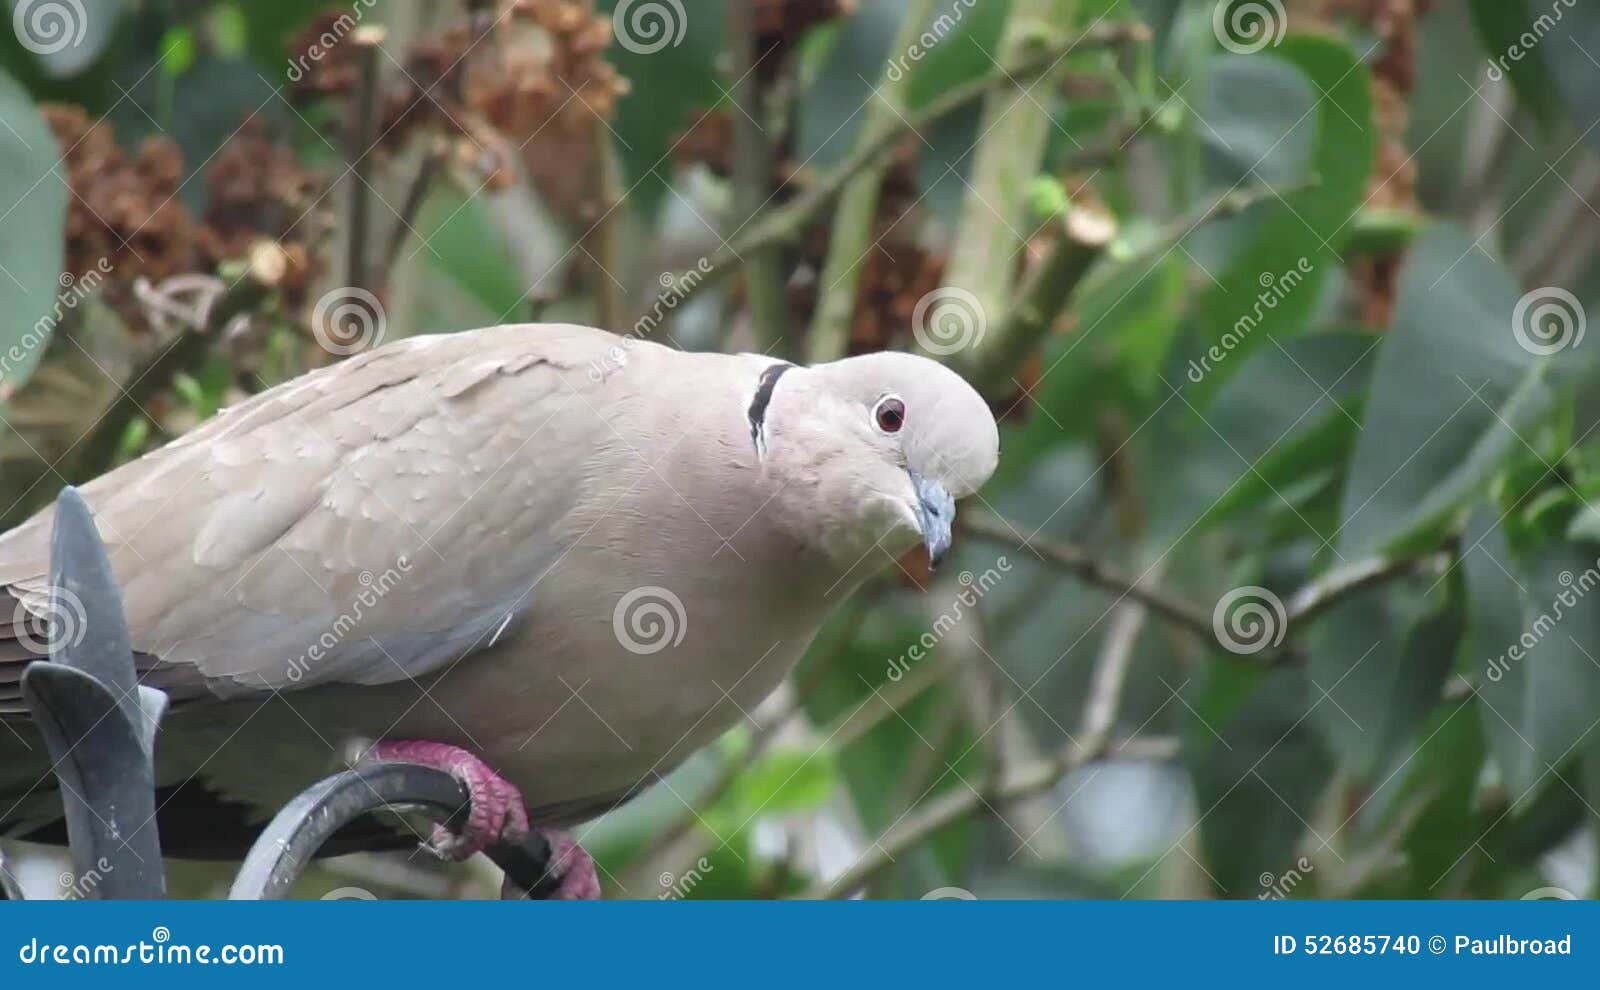 Ring Dove Species Profile | That Bird Blog